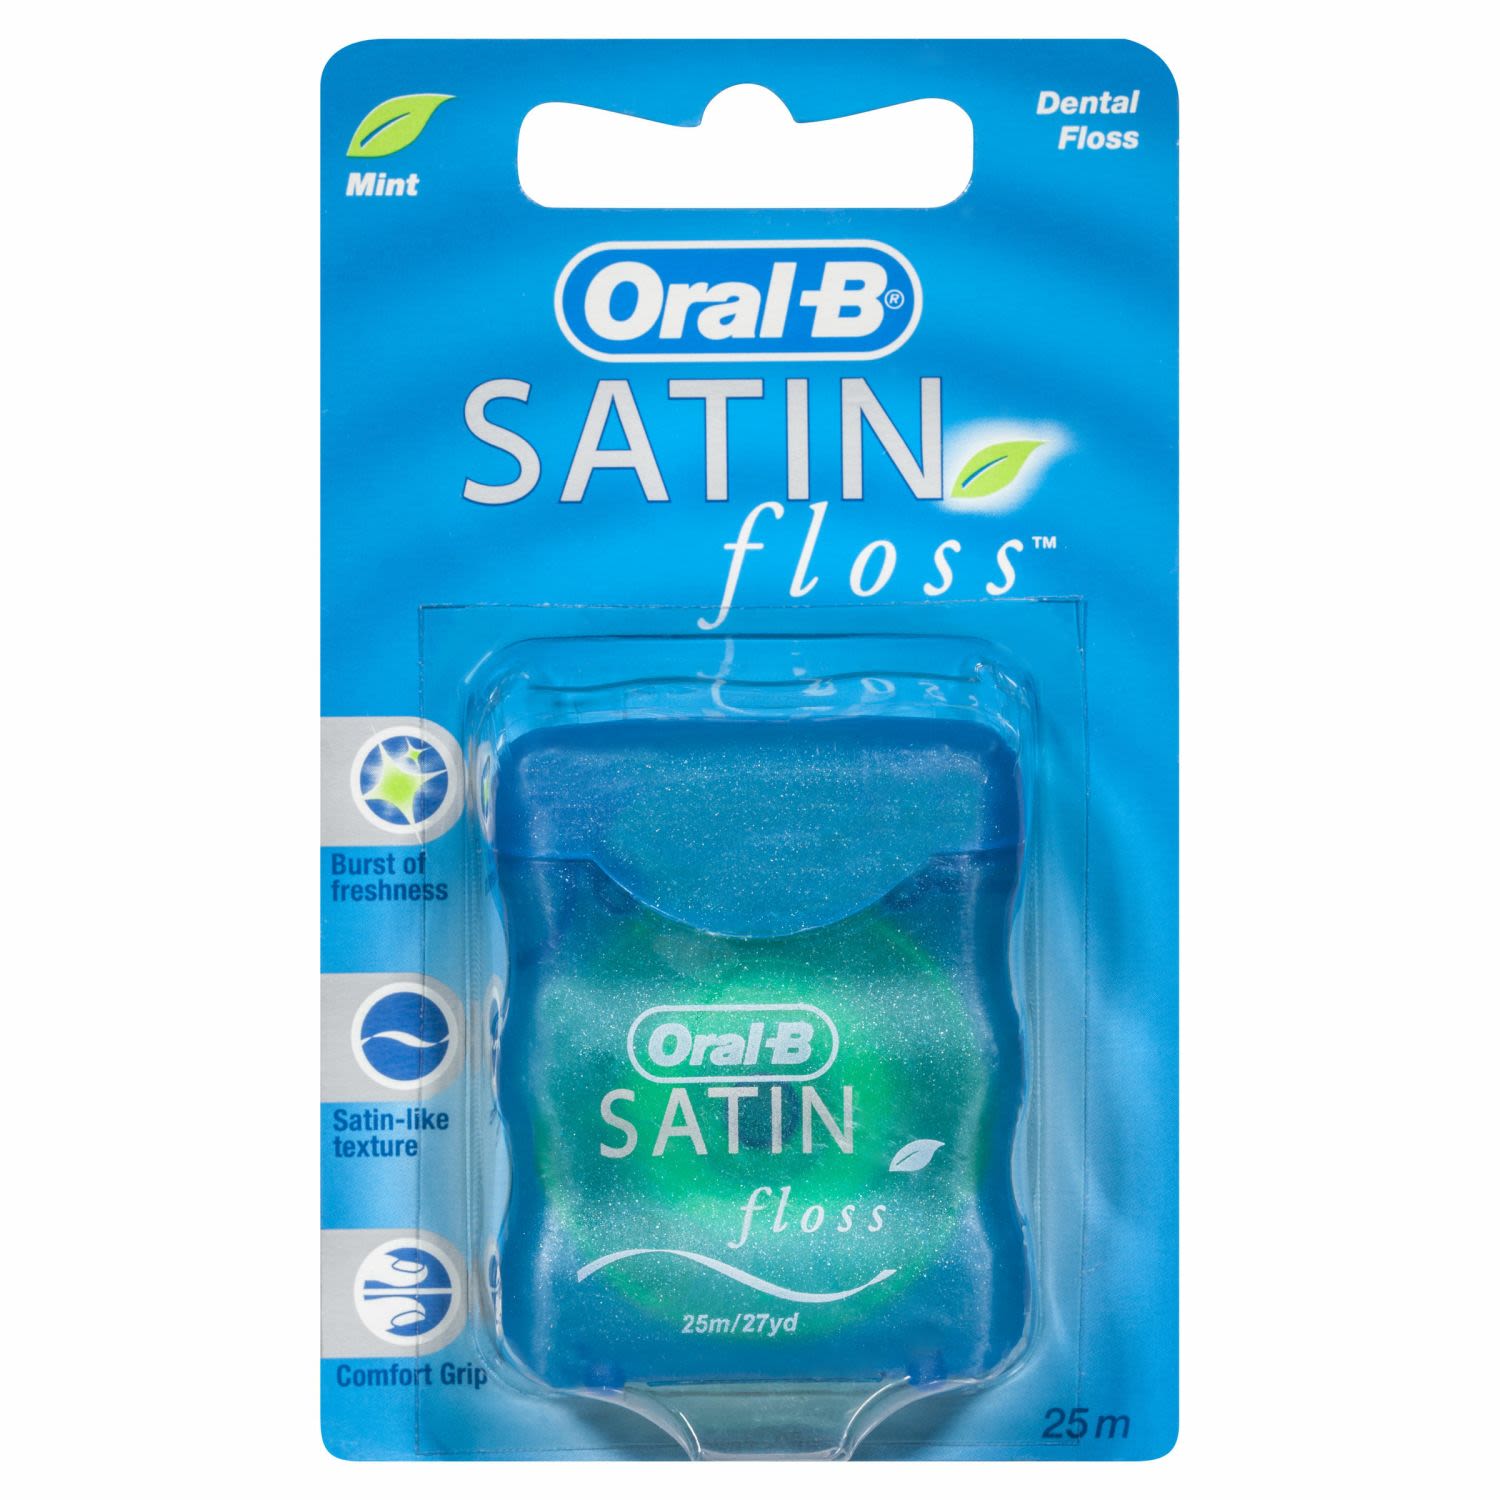 Oral-B Satin Floss Dental Floss Mint 25m, 1 Each